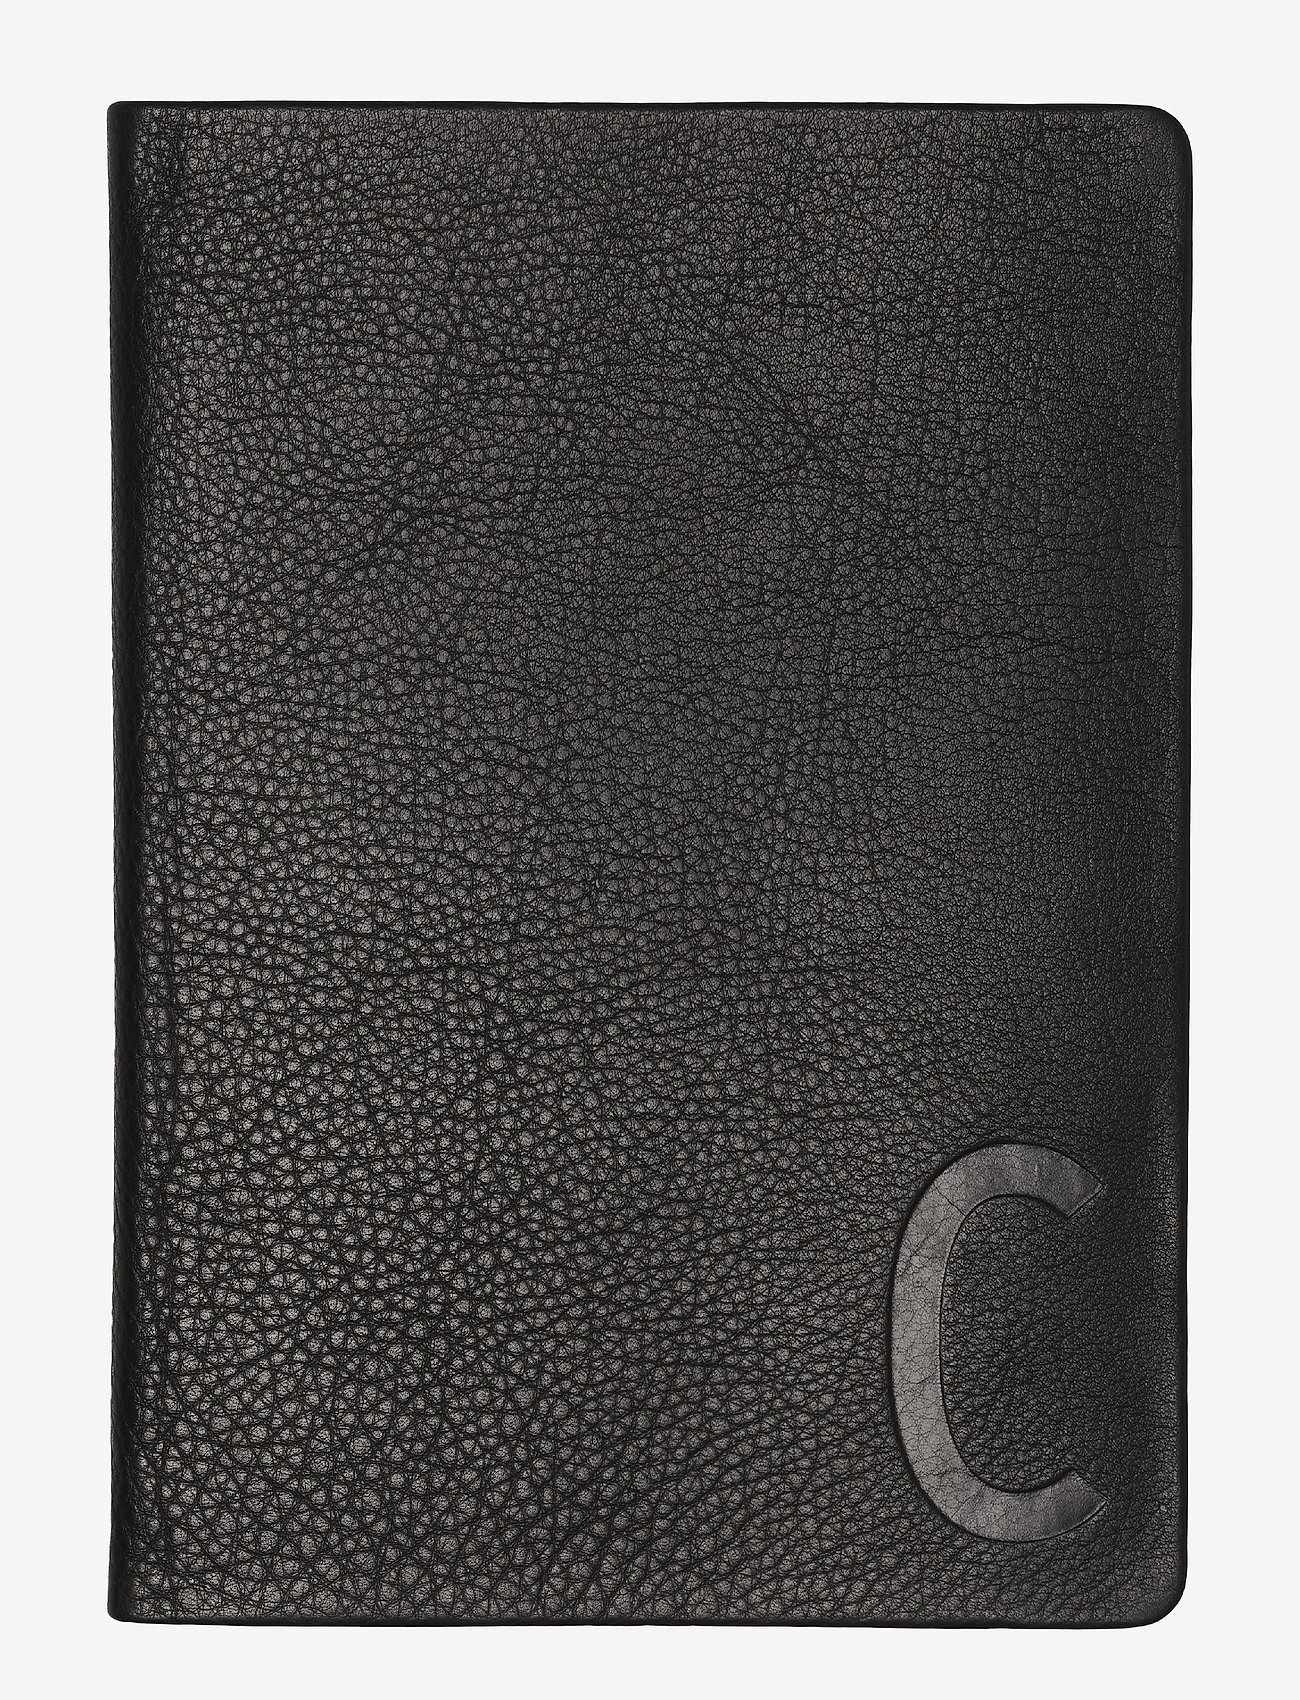 Design Letters - SUIT UP - Personal Notebook - kodu - black - 0